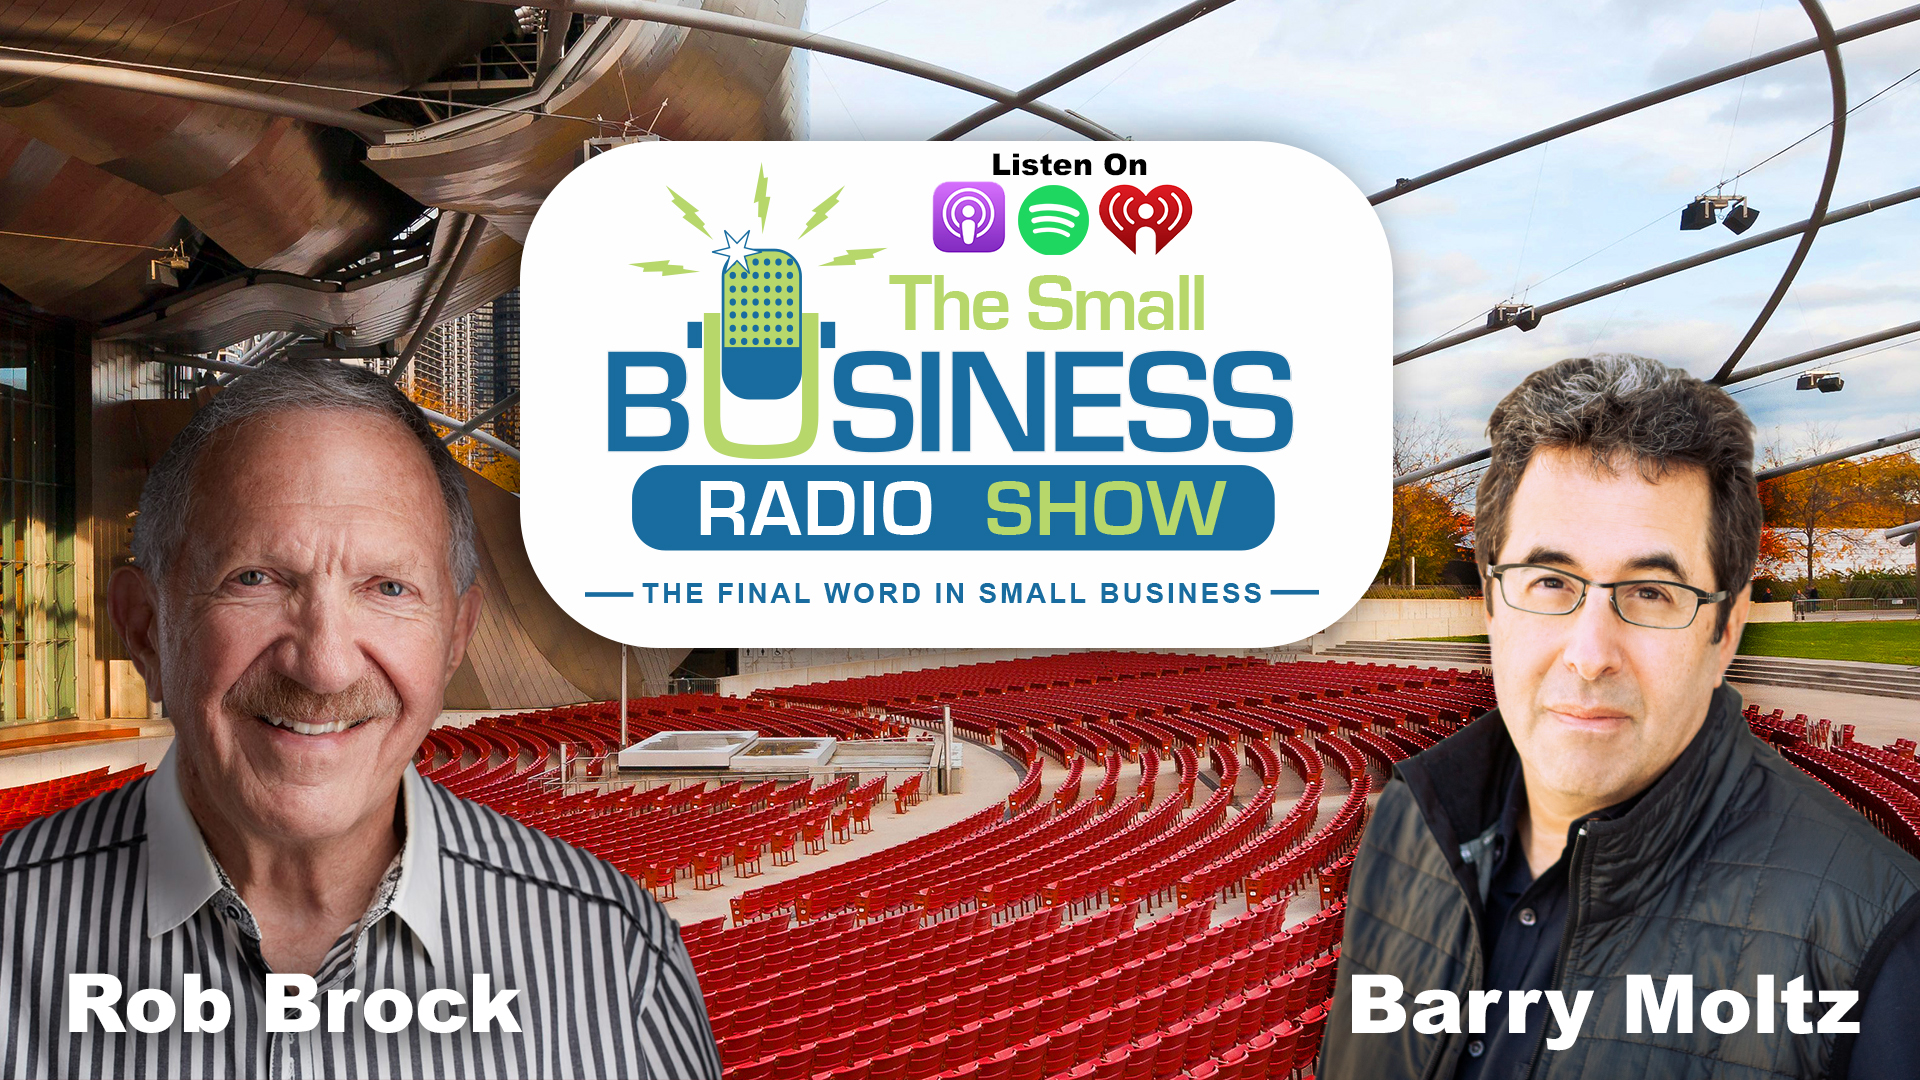 Rob Brock on The Small Business Radio Show